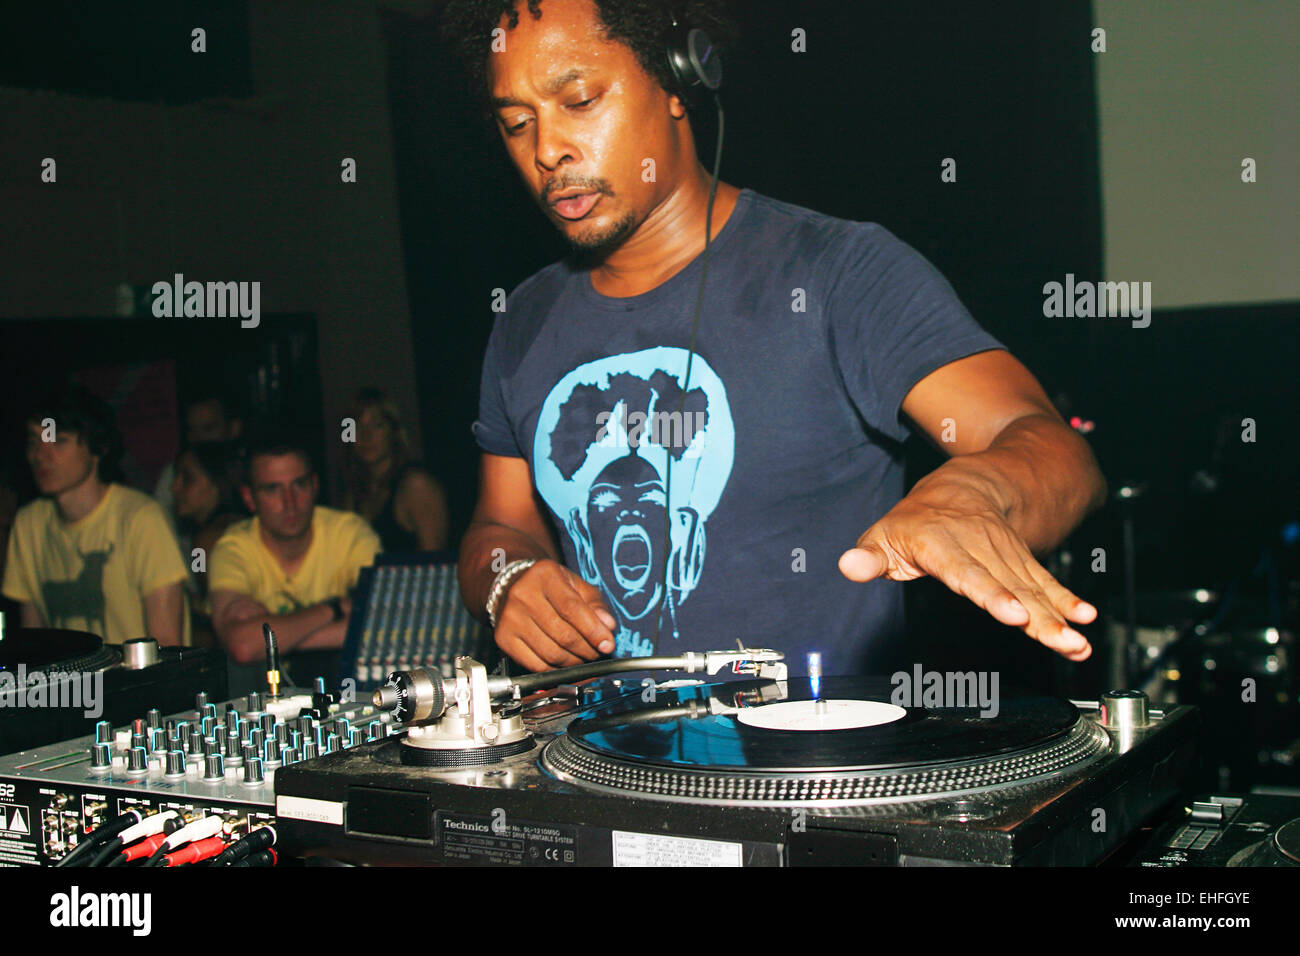 Derrick kann DJing auf der London-Xpress-Bühne am TDK Cross Festival Londons. Stockfoto